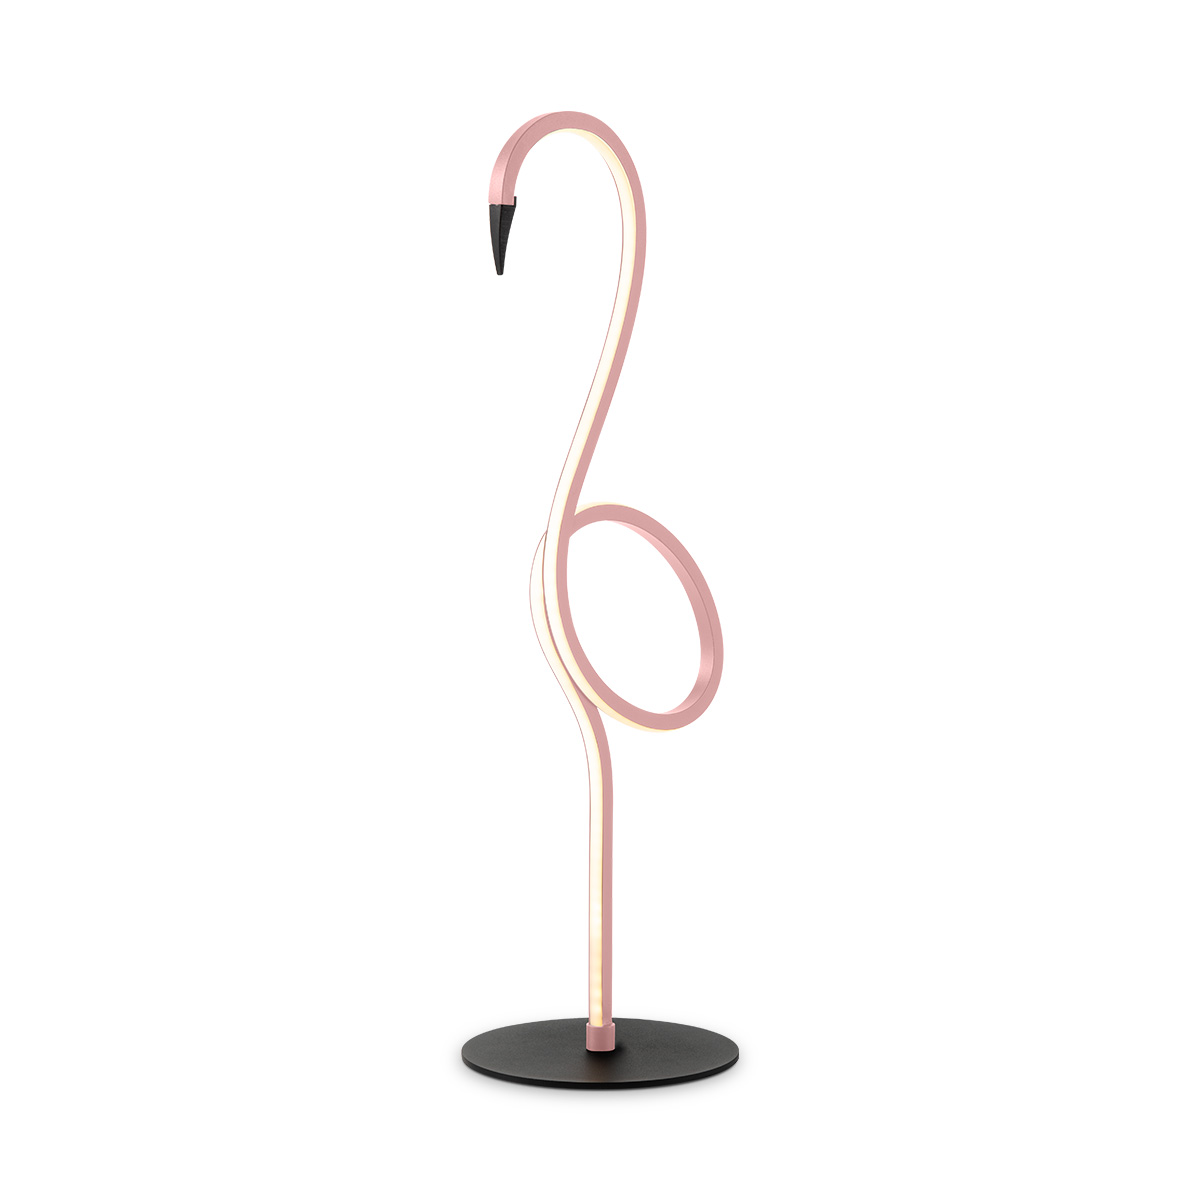 Tangla lighting - TLT7611-01APK - LED Table lamp - metal - pink